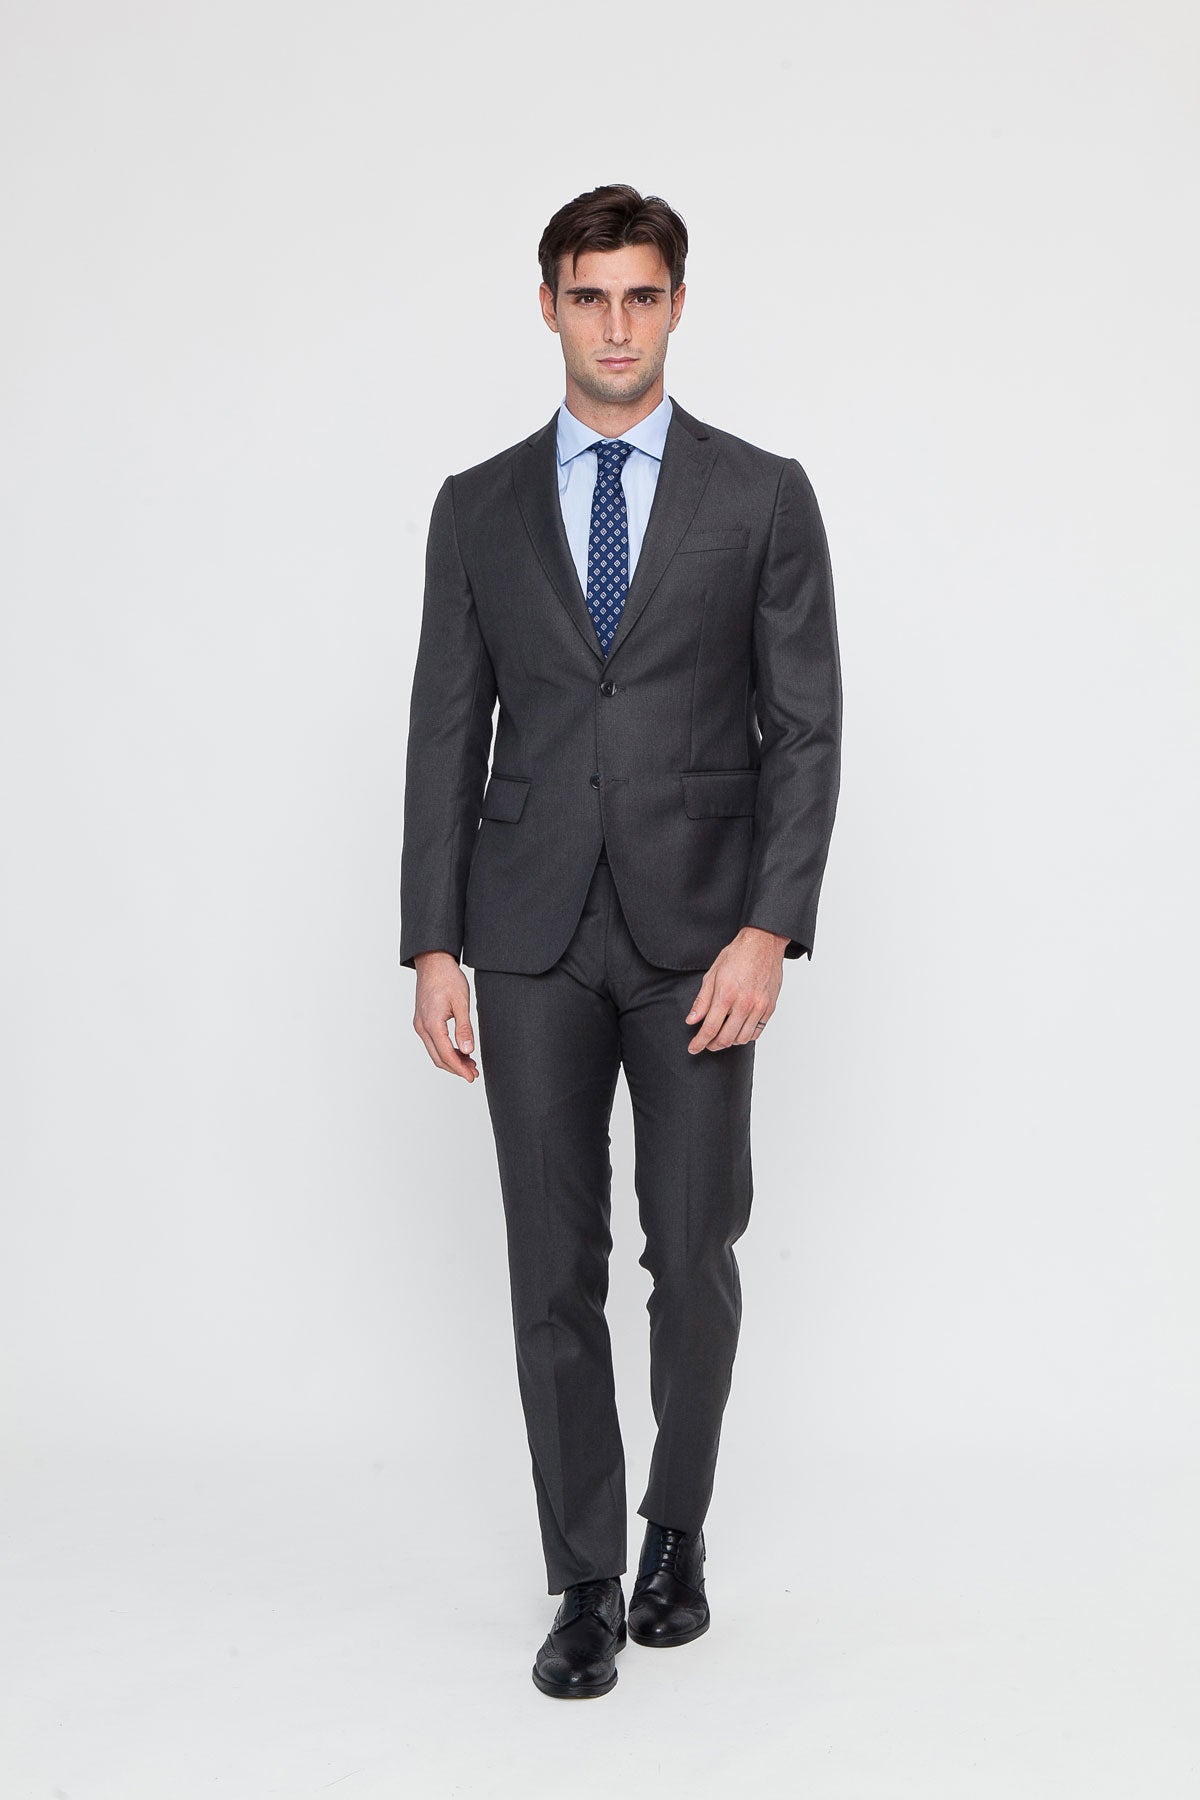 Gray suit